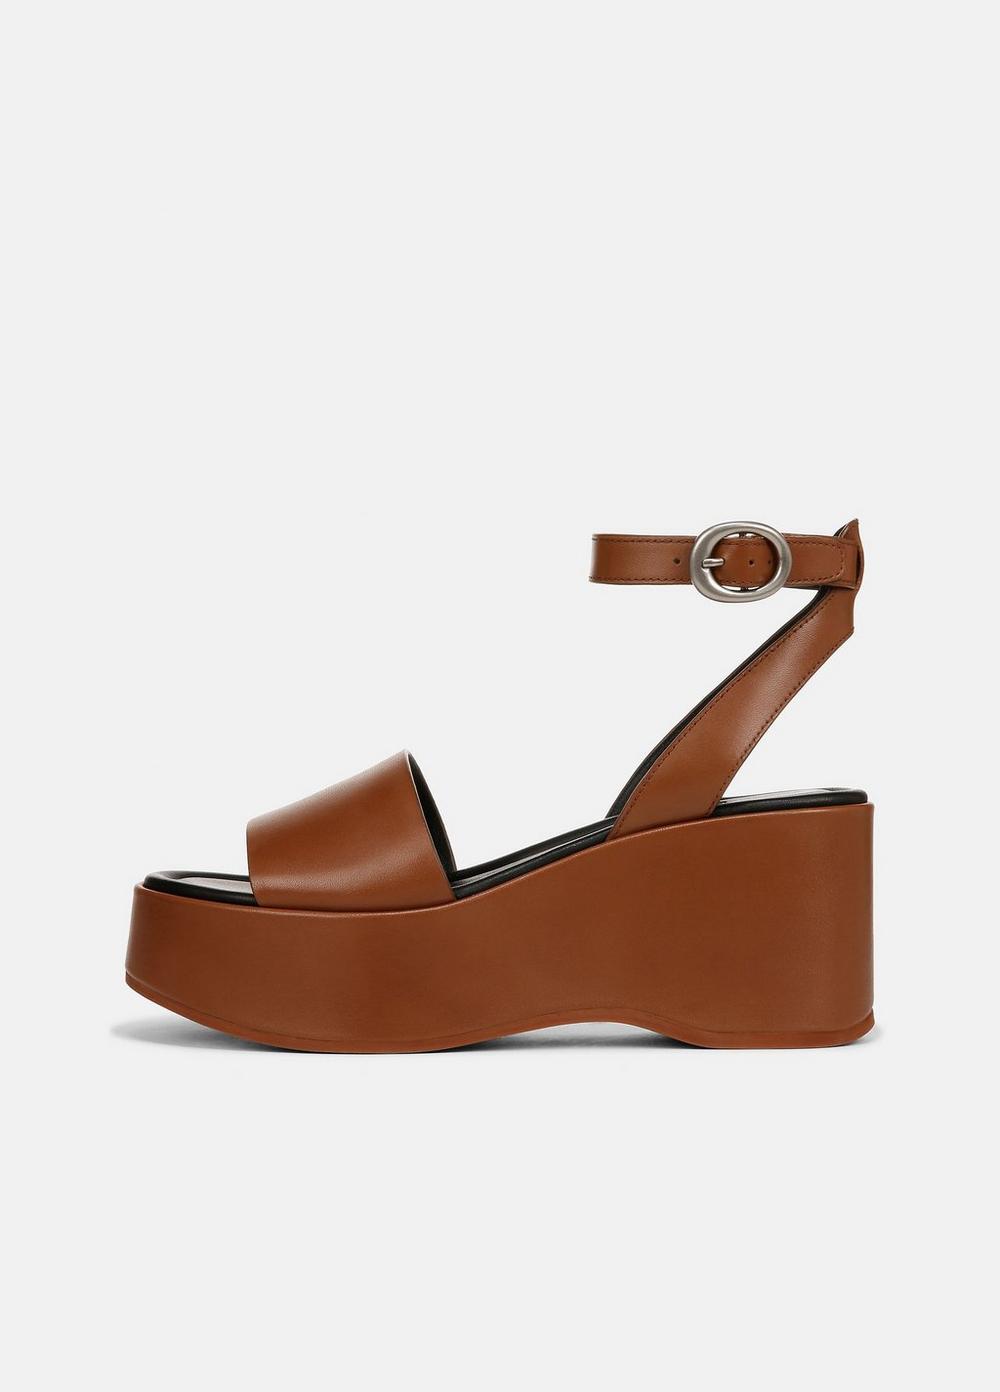 Phillipa Leather Platform Sandal, Sequoia Brown, Size 9.5 Vince